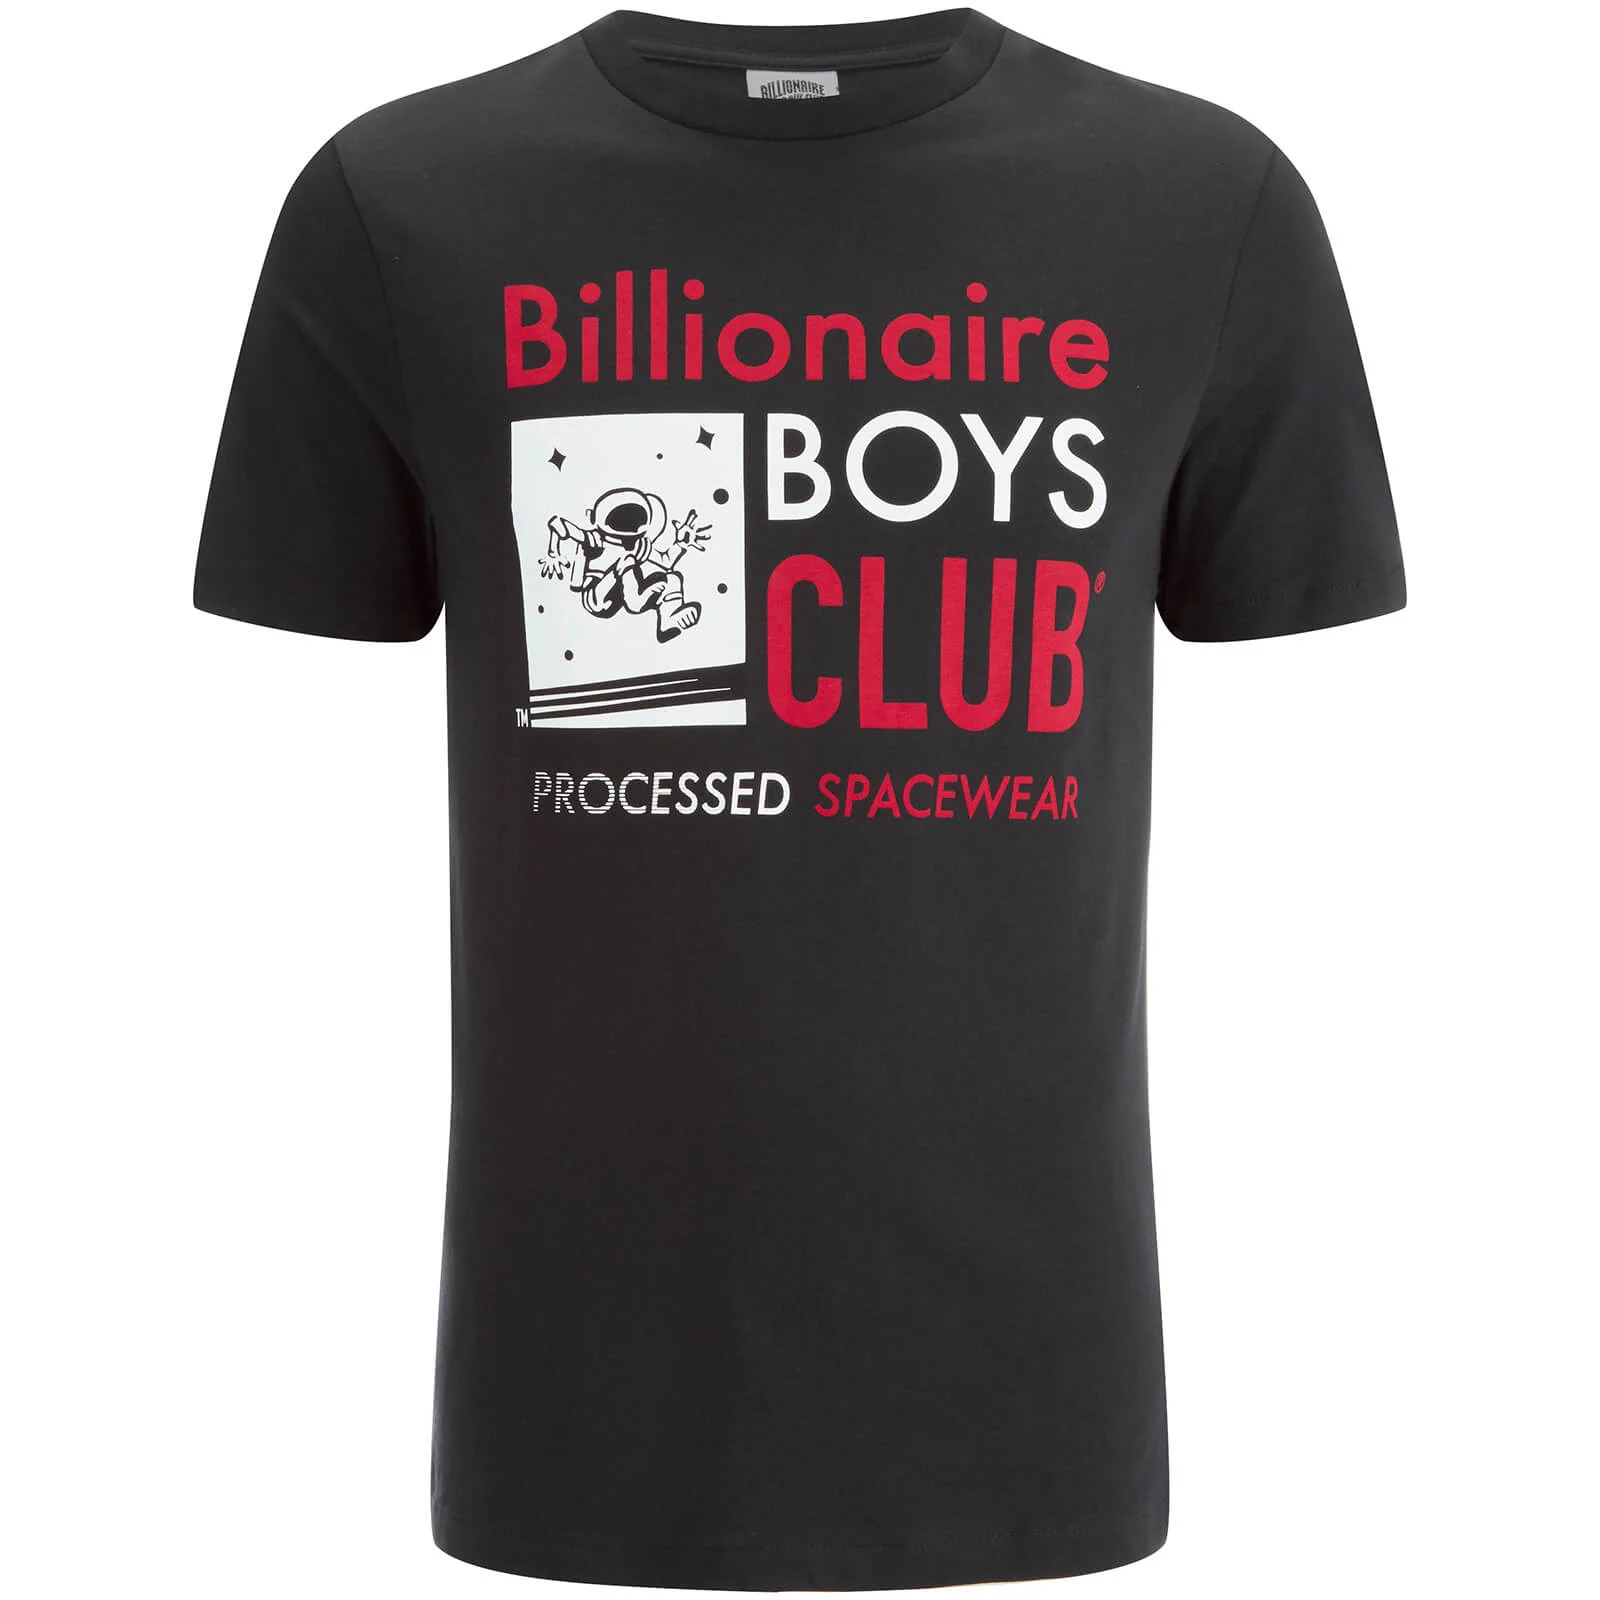 Billionaire Boys Club Men's Processed T-Shirt - Black Image 1